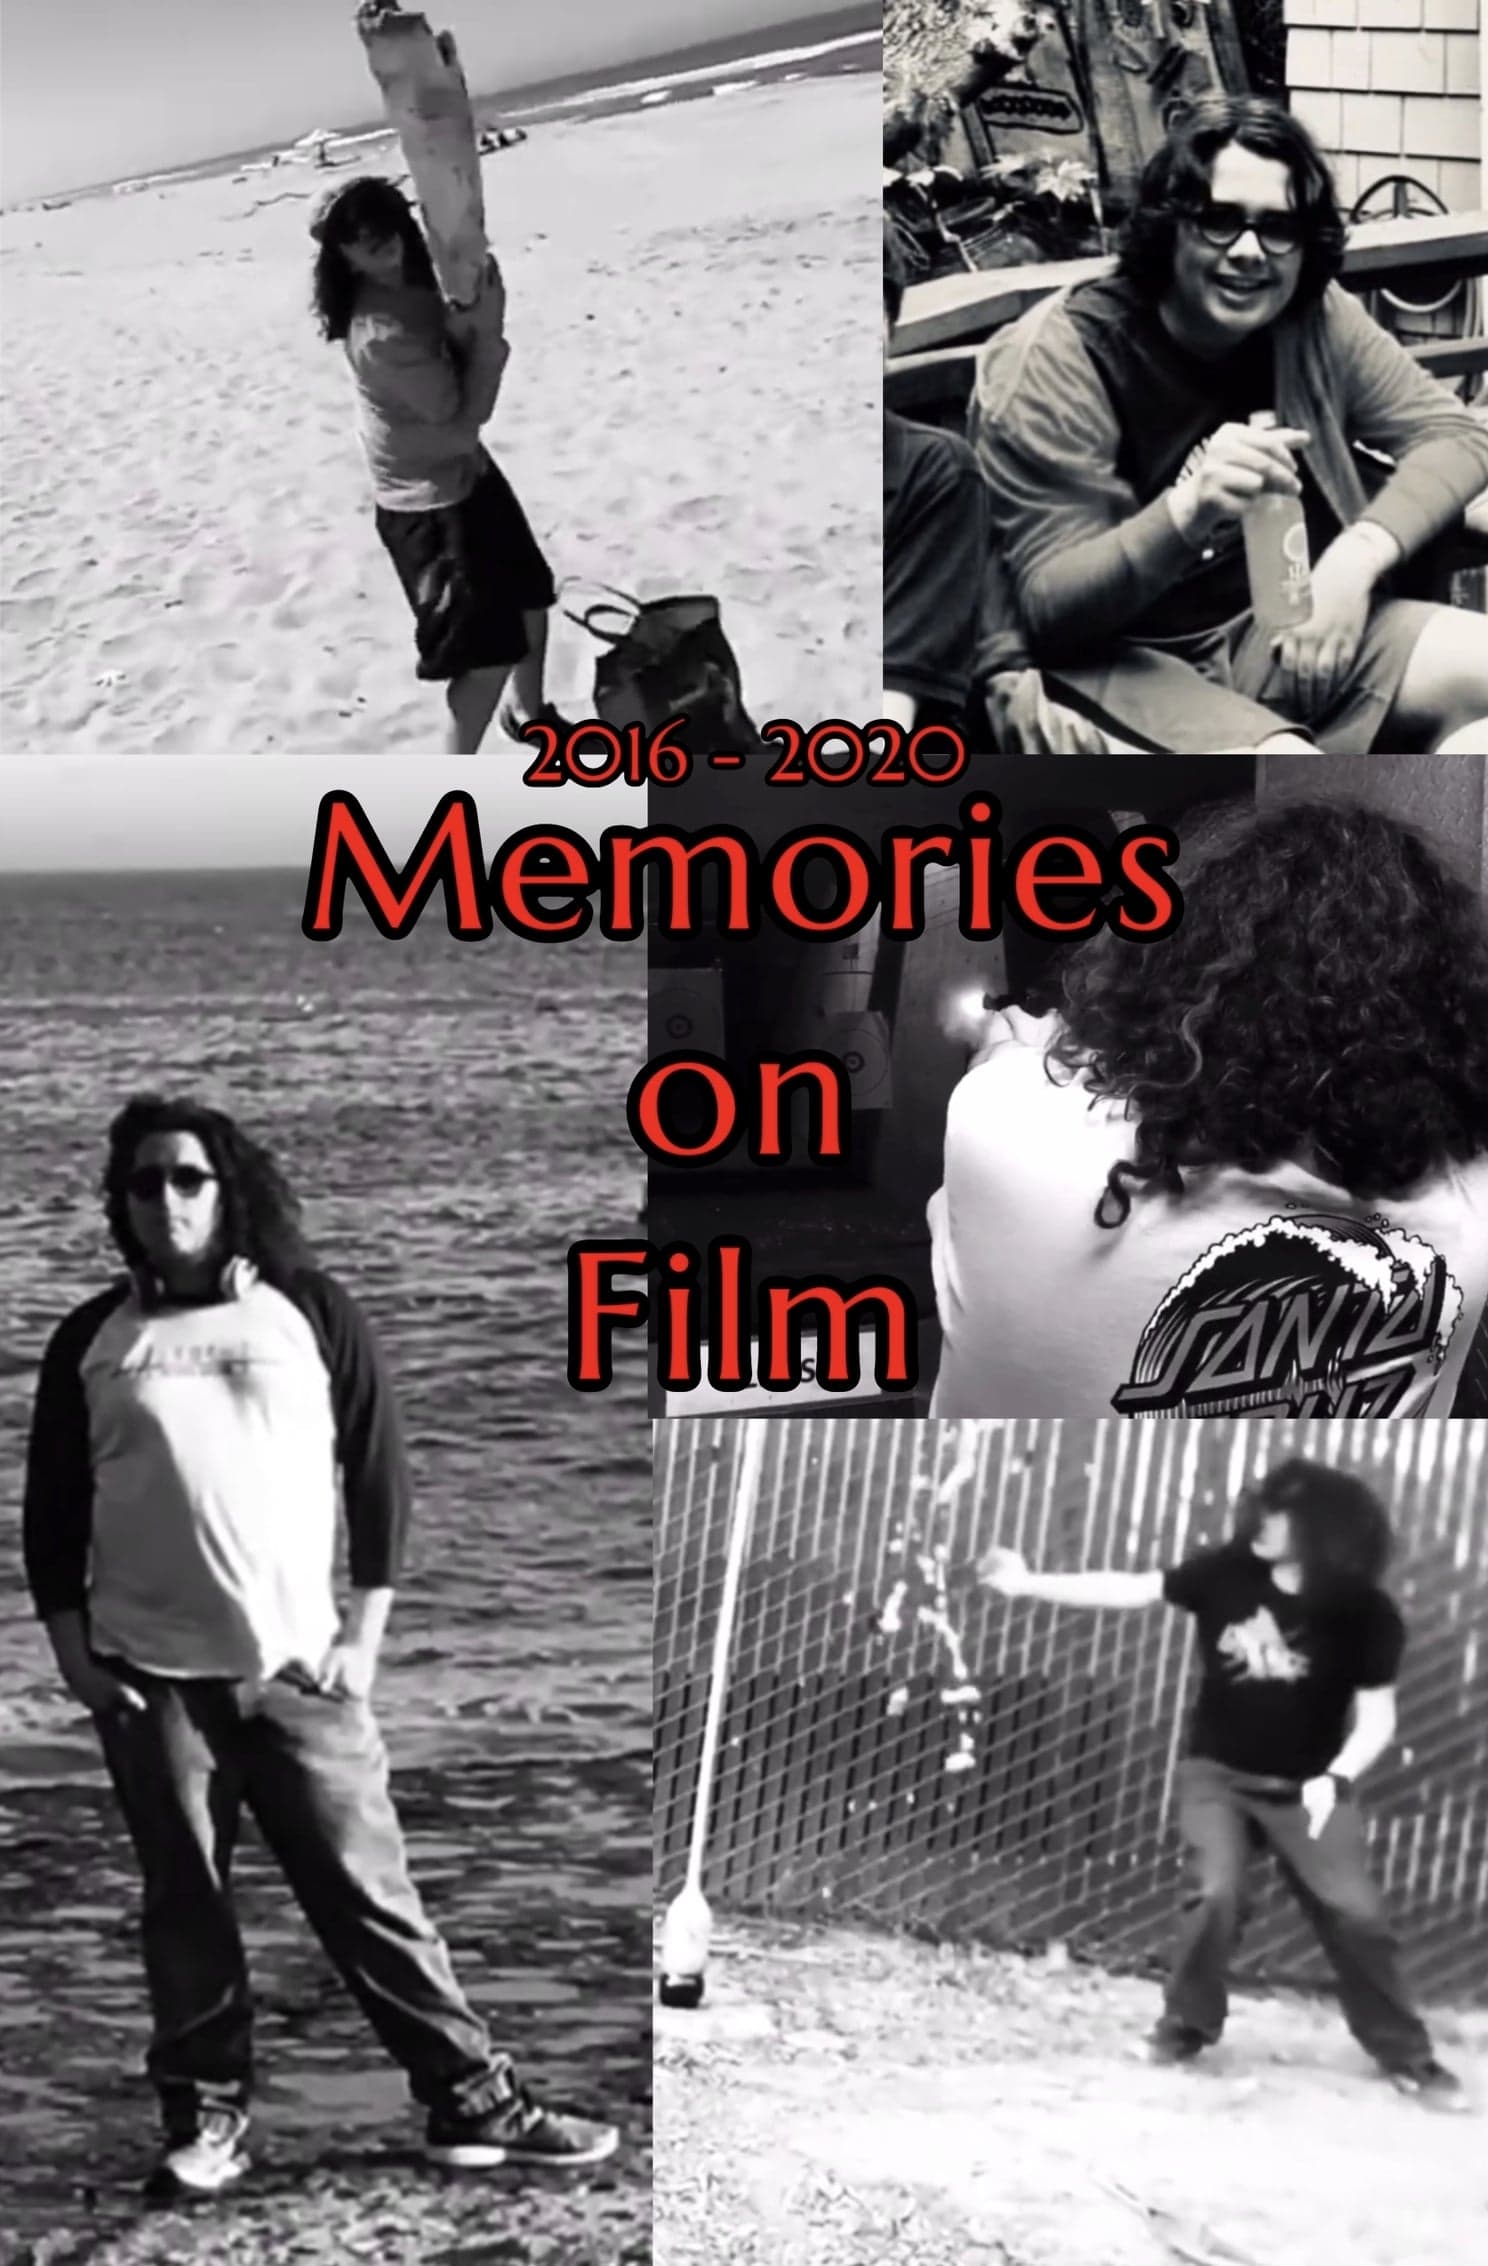 2016 - 2020: Memories on Film